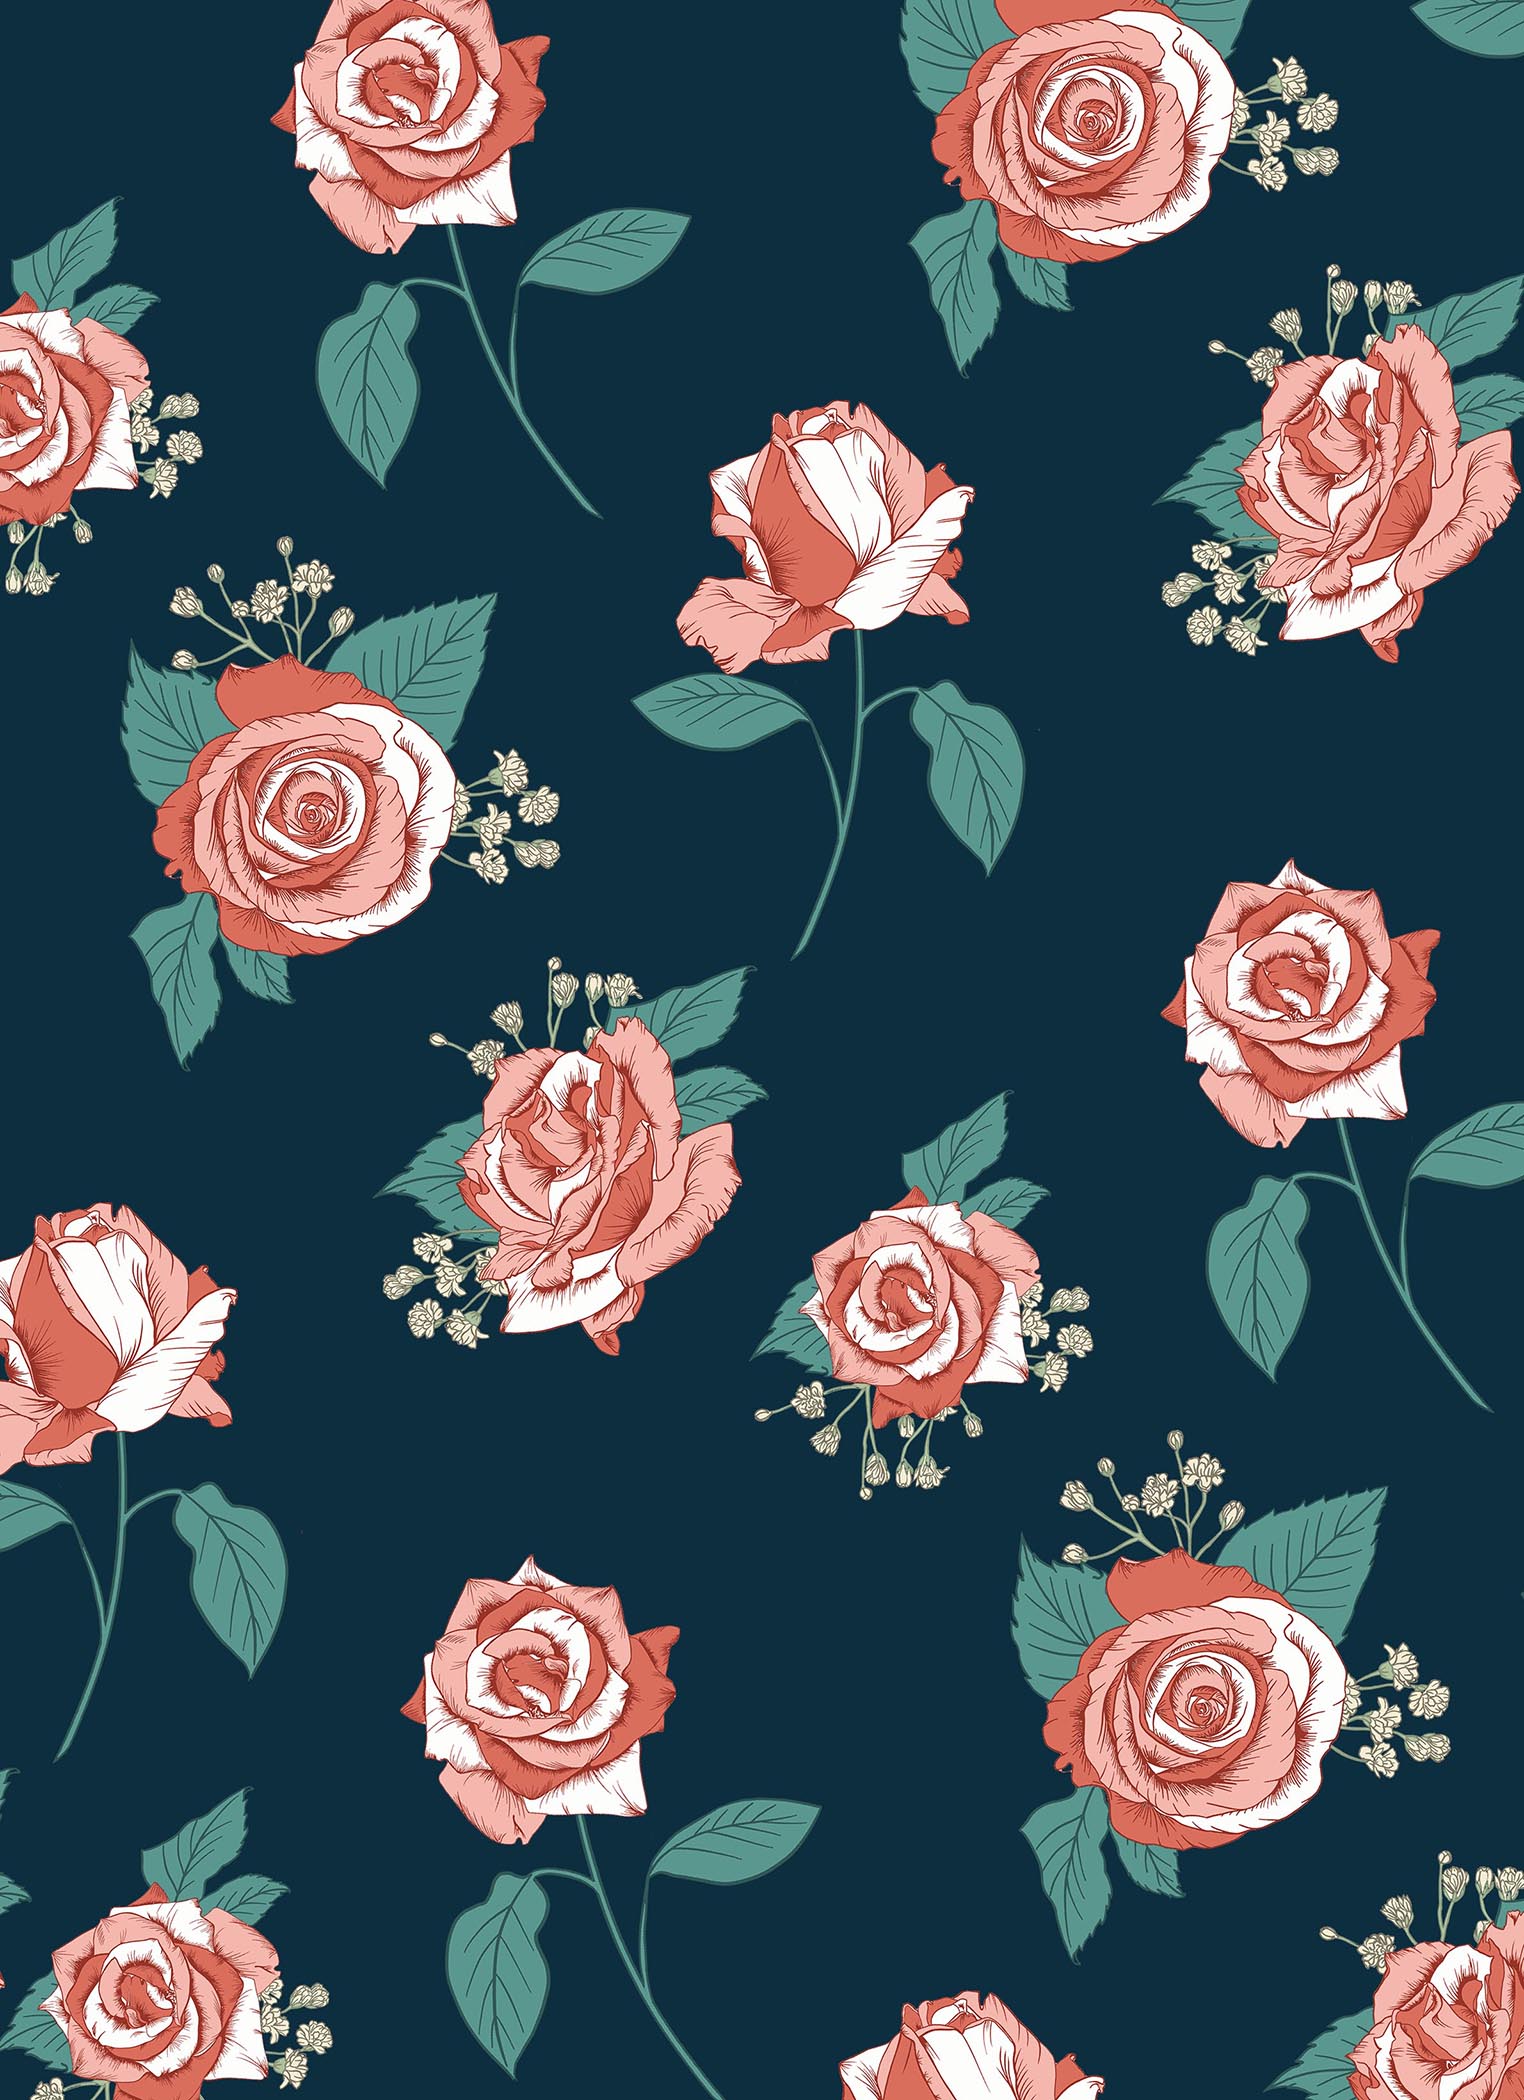 Beautiful Turquoise Rose Flower Women's Tee Image by Shutterstock 